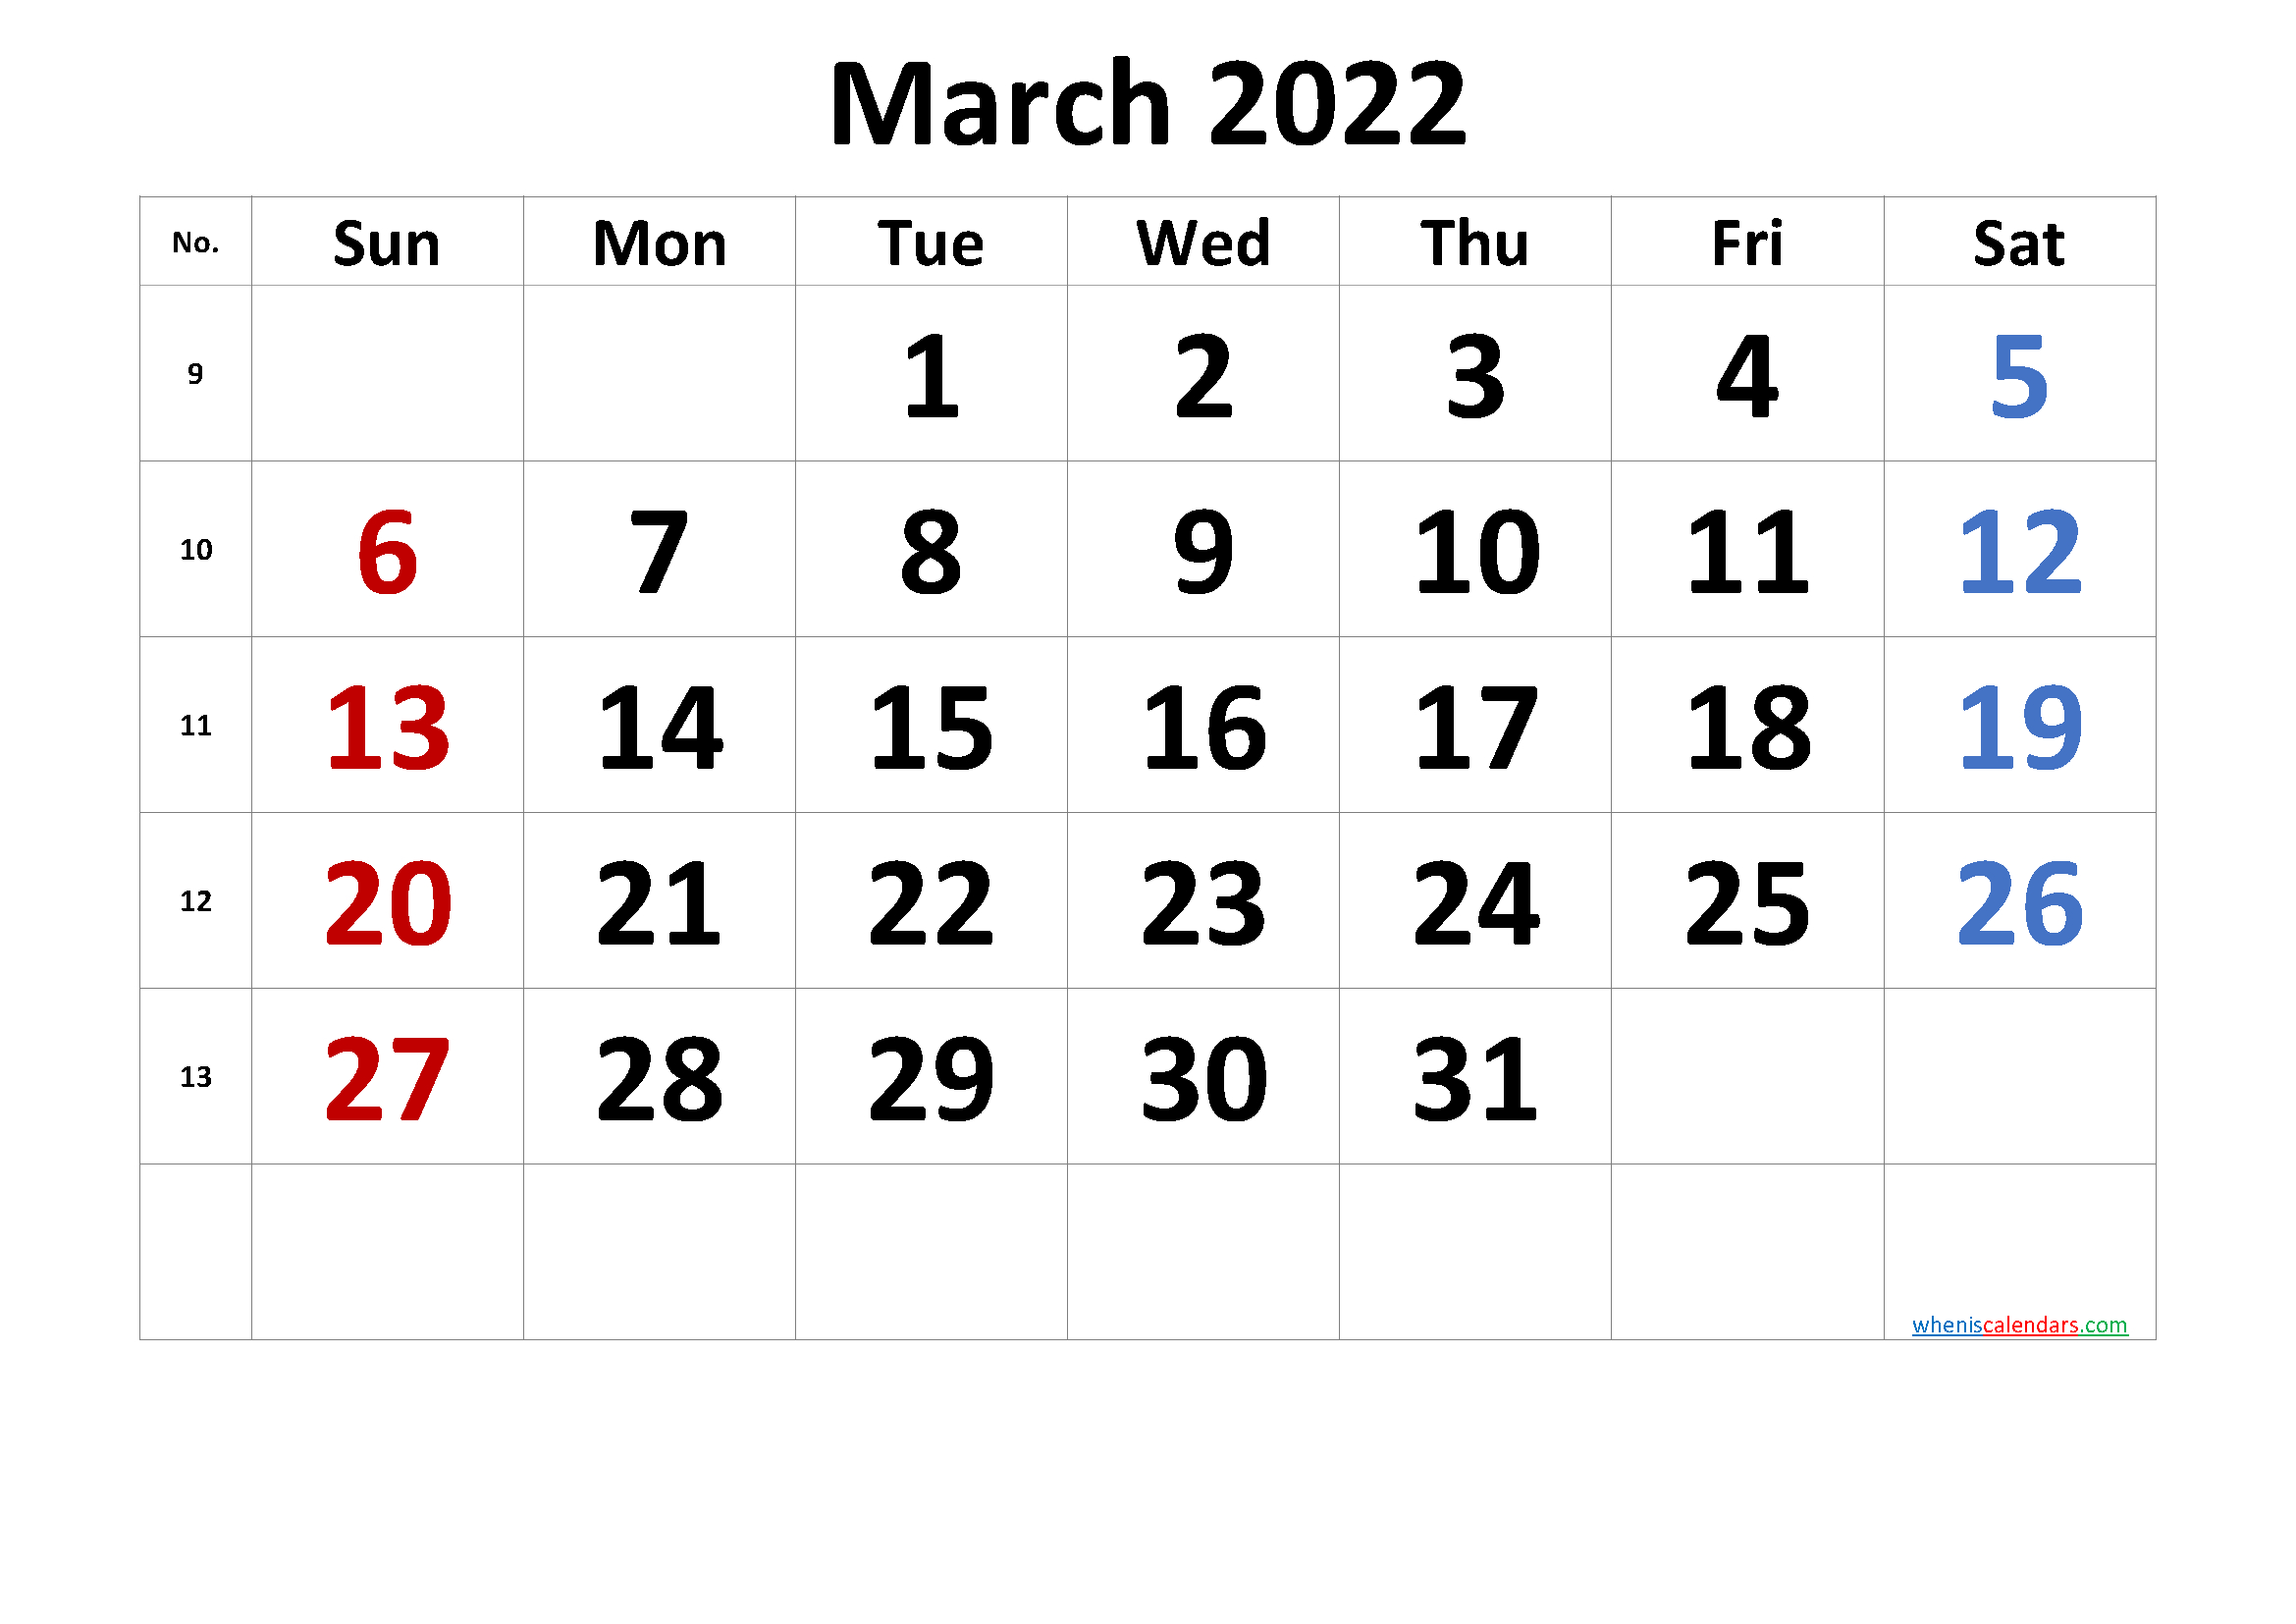 March 2022 Printable Calendar [Free Premium] - Free  Year Calendar April 2022 To March 2022